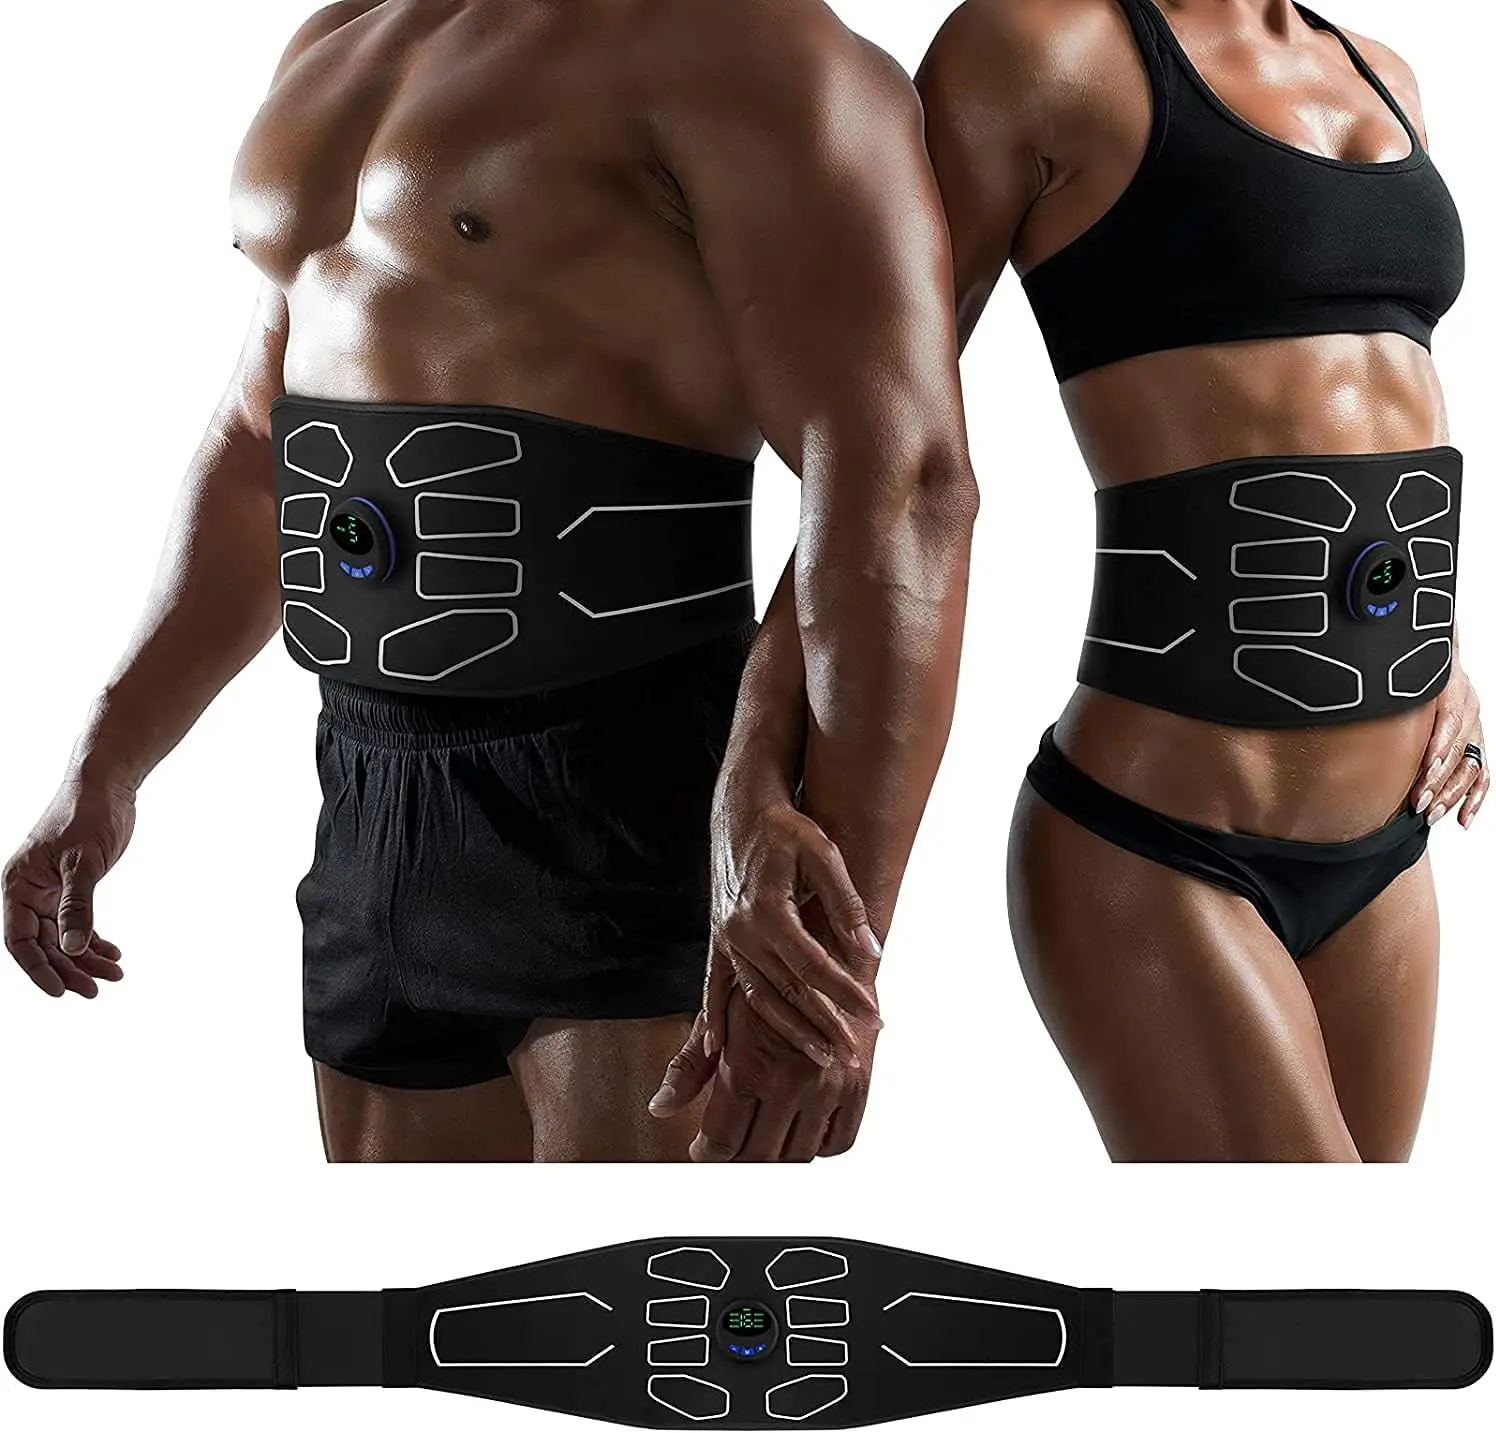 

Stimulator, Ab Machine, Abdominal Toning Belt Muscle Toner Fitness Training Gear Ab Trainer Equipment for Home MZ-4